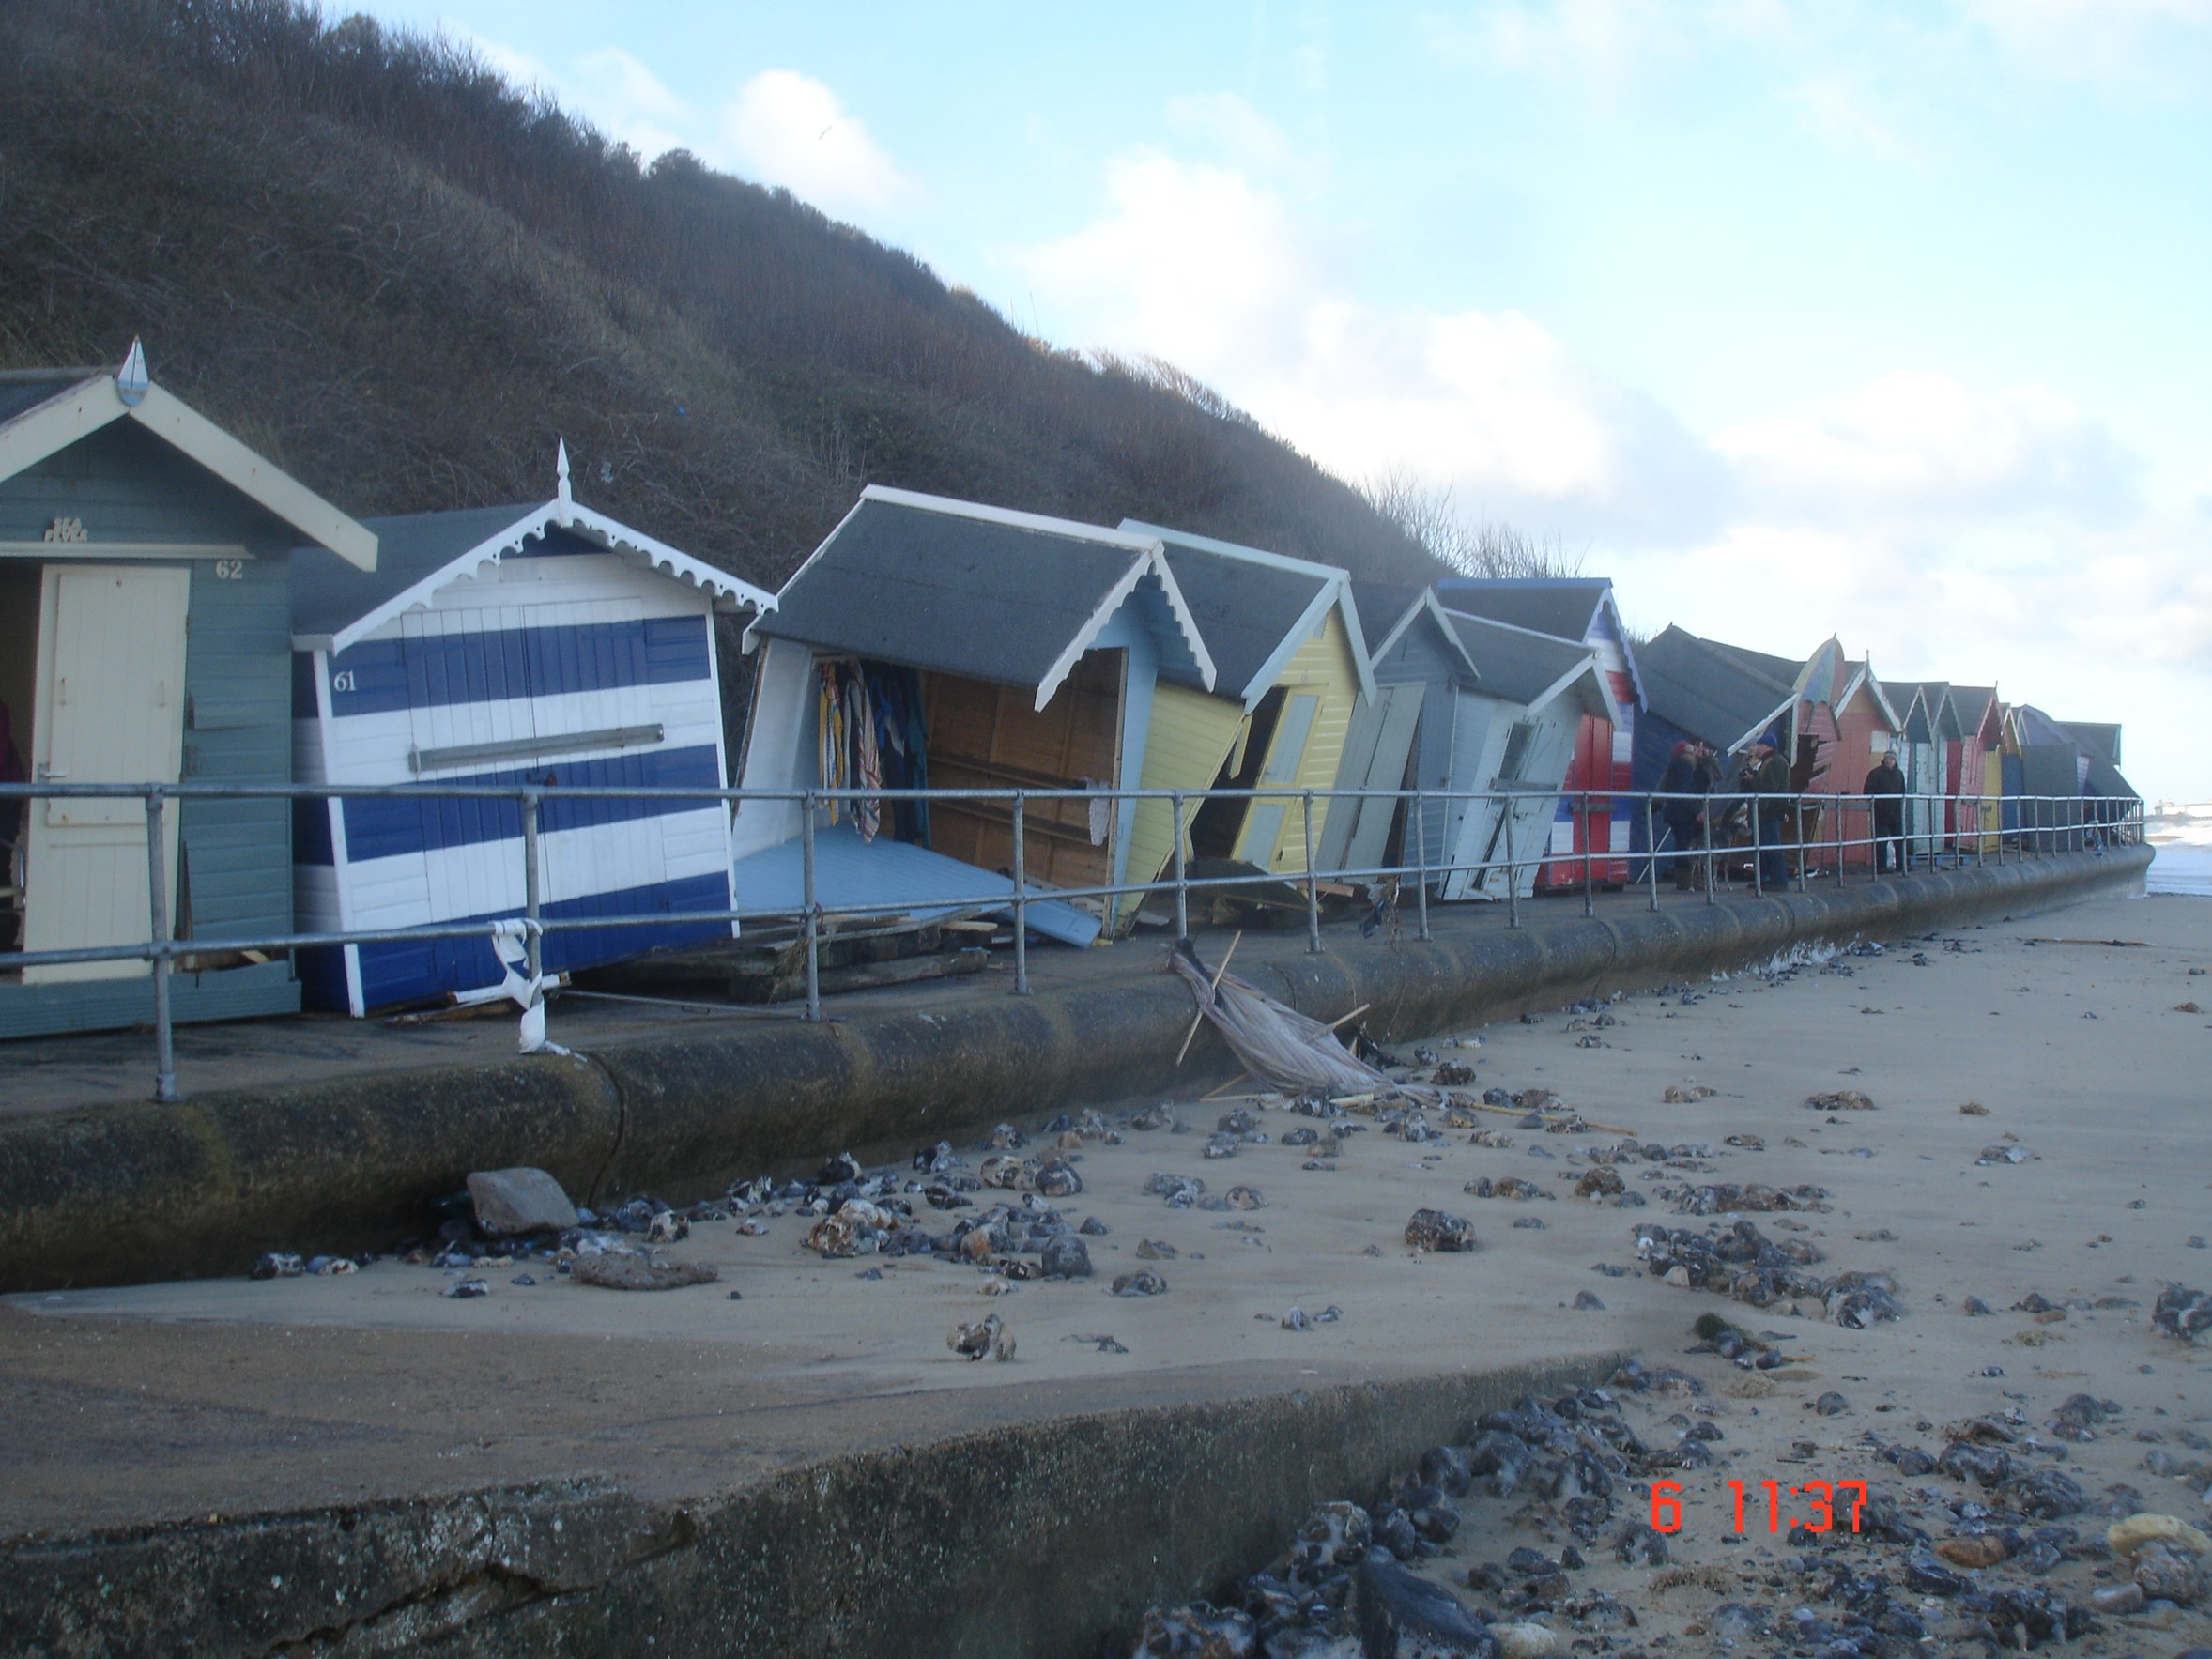 Damaged beach huts during 2013 storm surge